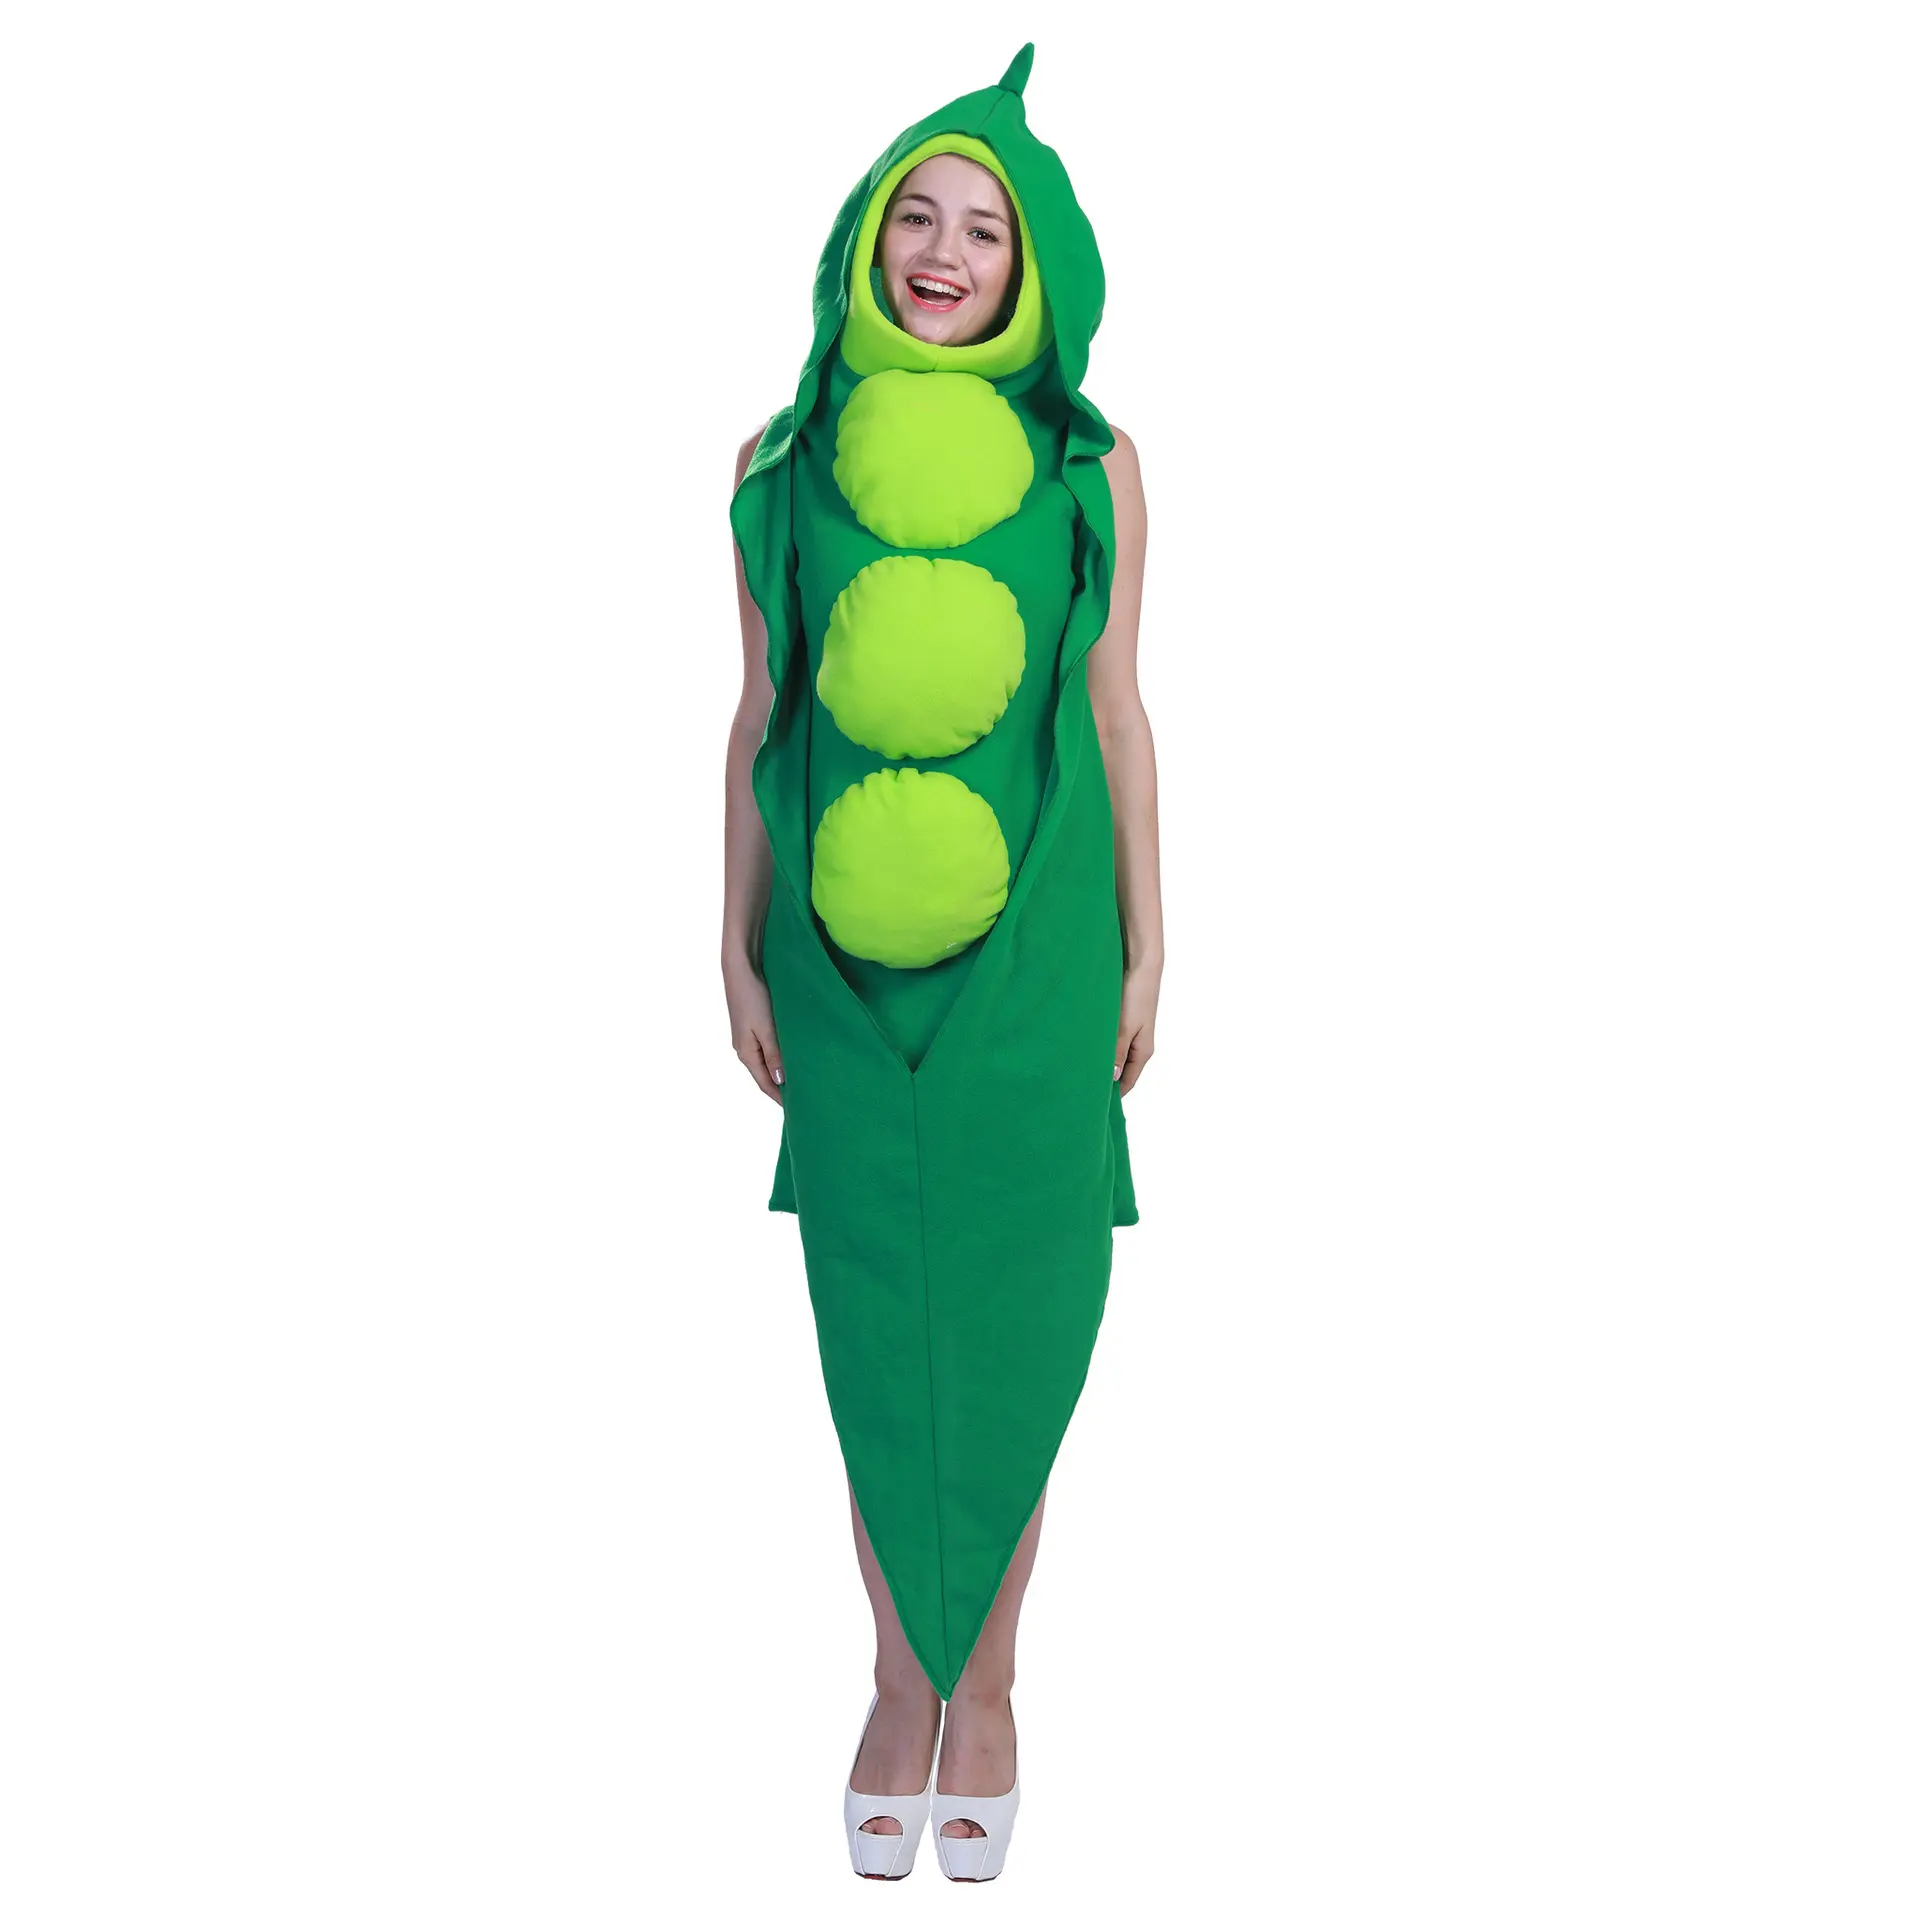 Disfraz con capucha verde para adulto, personaje de Mascota de guisante para Halloween o carnaval